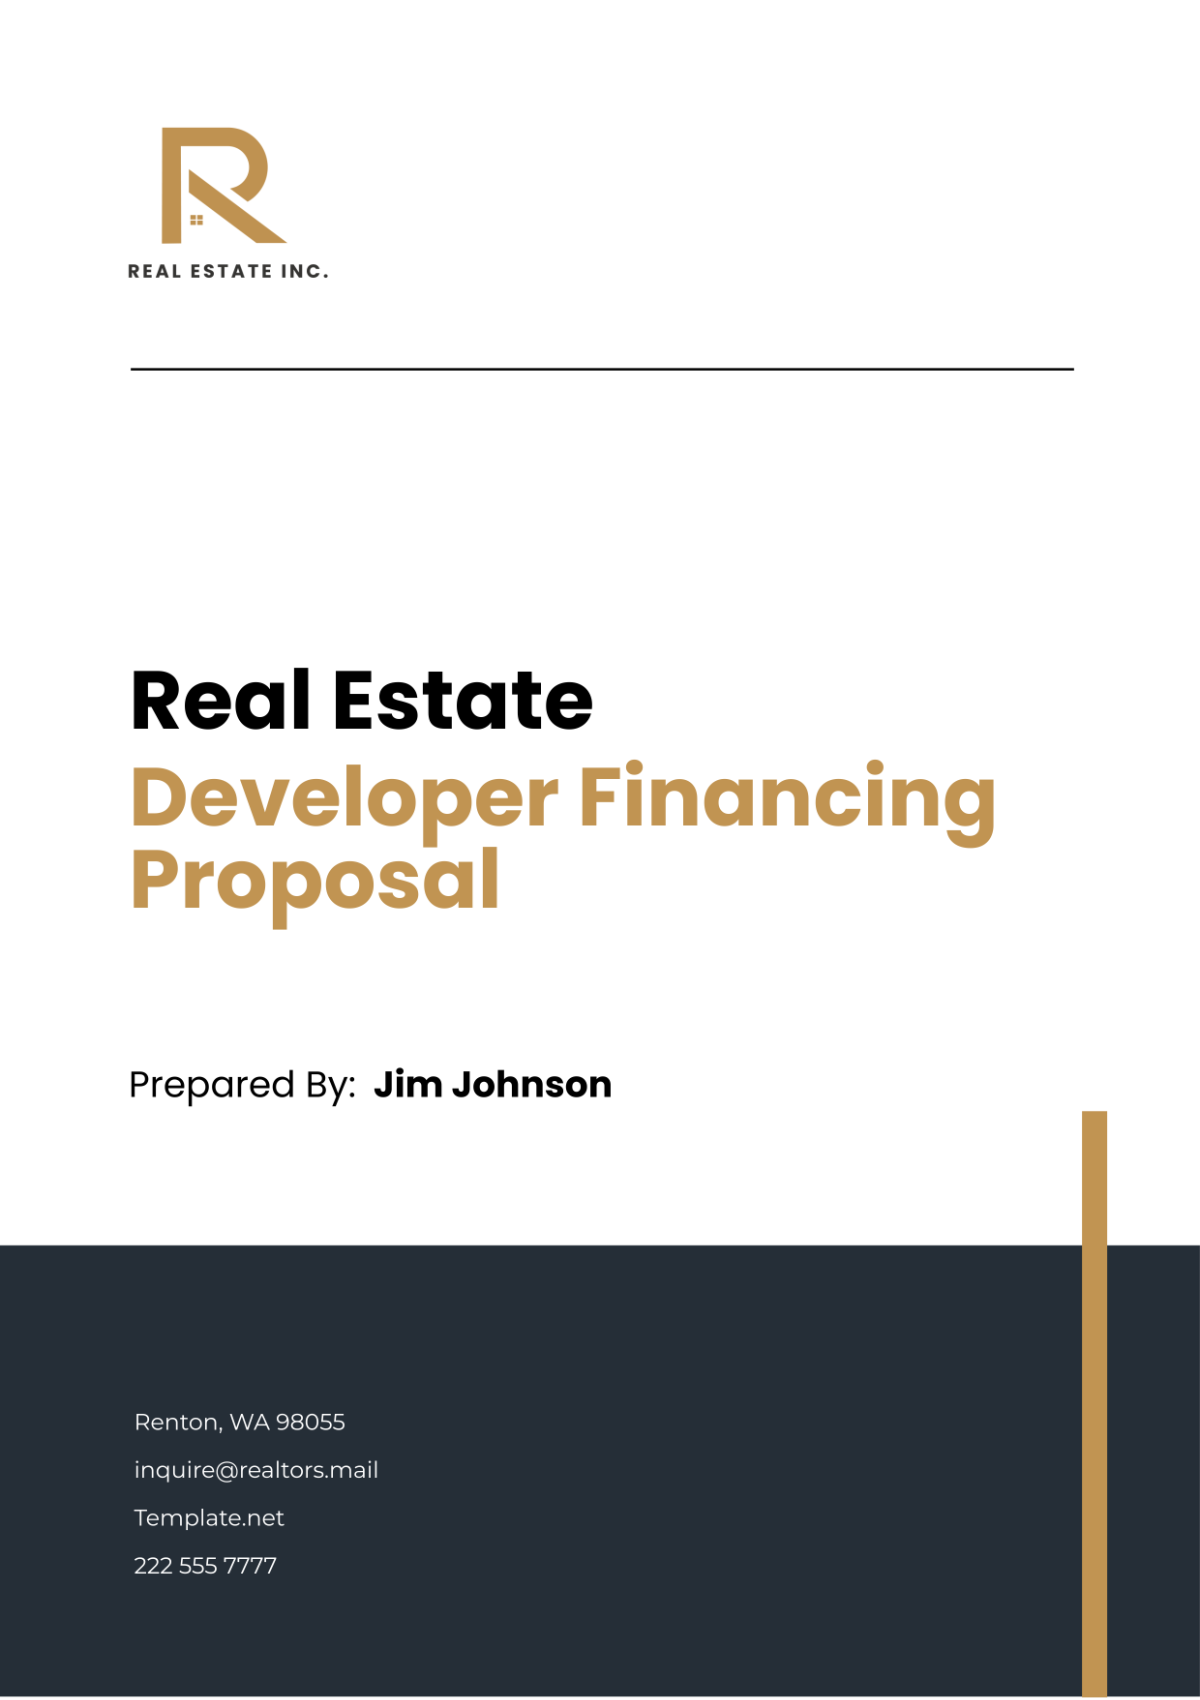 Real Estate Developer Financing Proposal Template